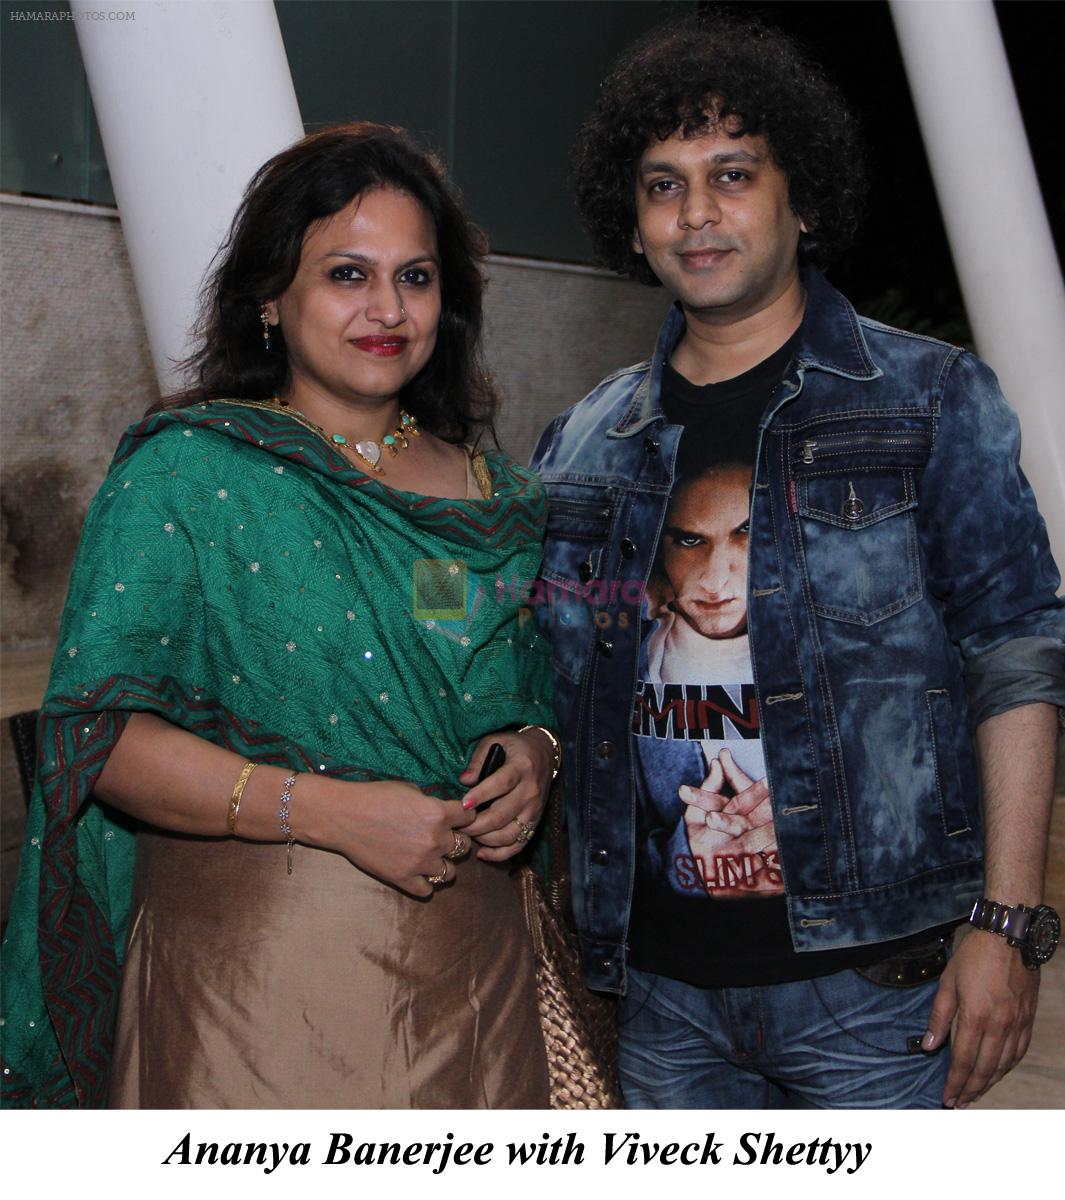 Ananya Banerjee with Viveck Shettyy at Cake Mixing Celebrations at Hotel Meluha the fern